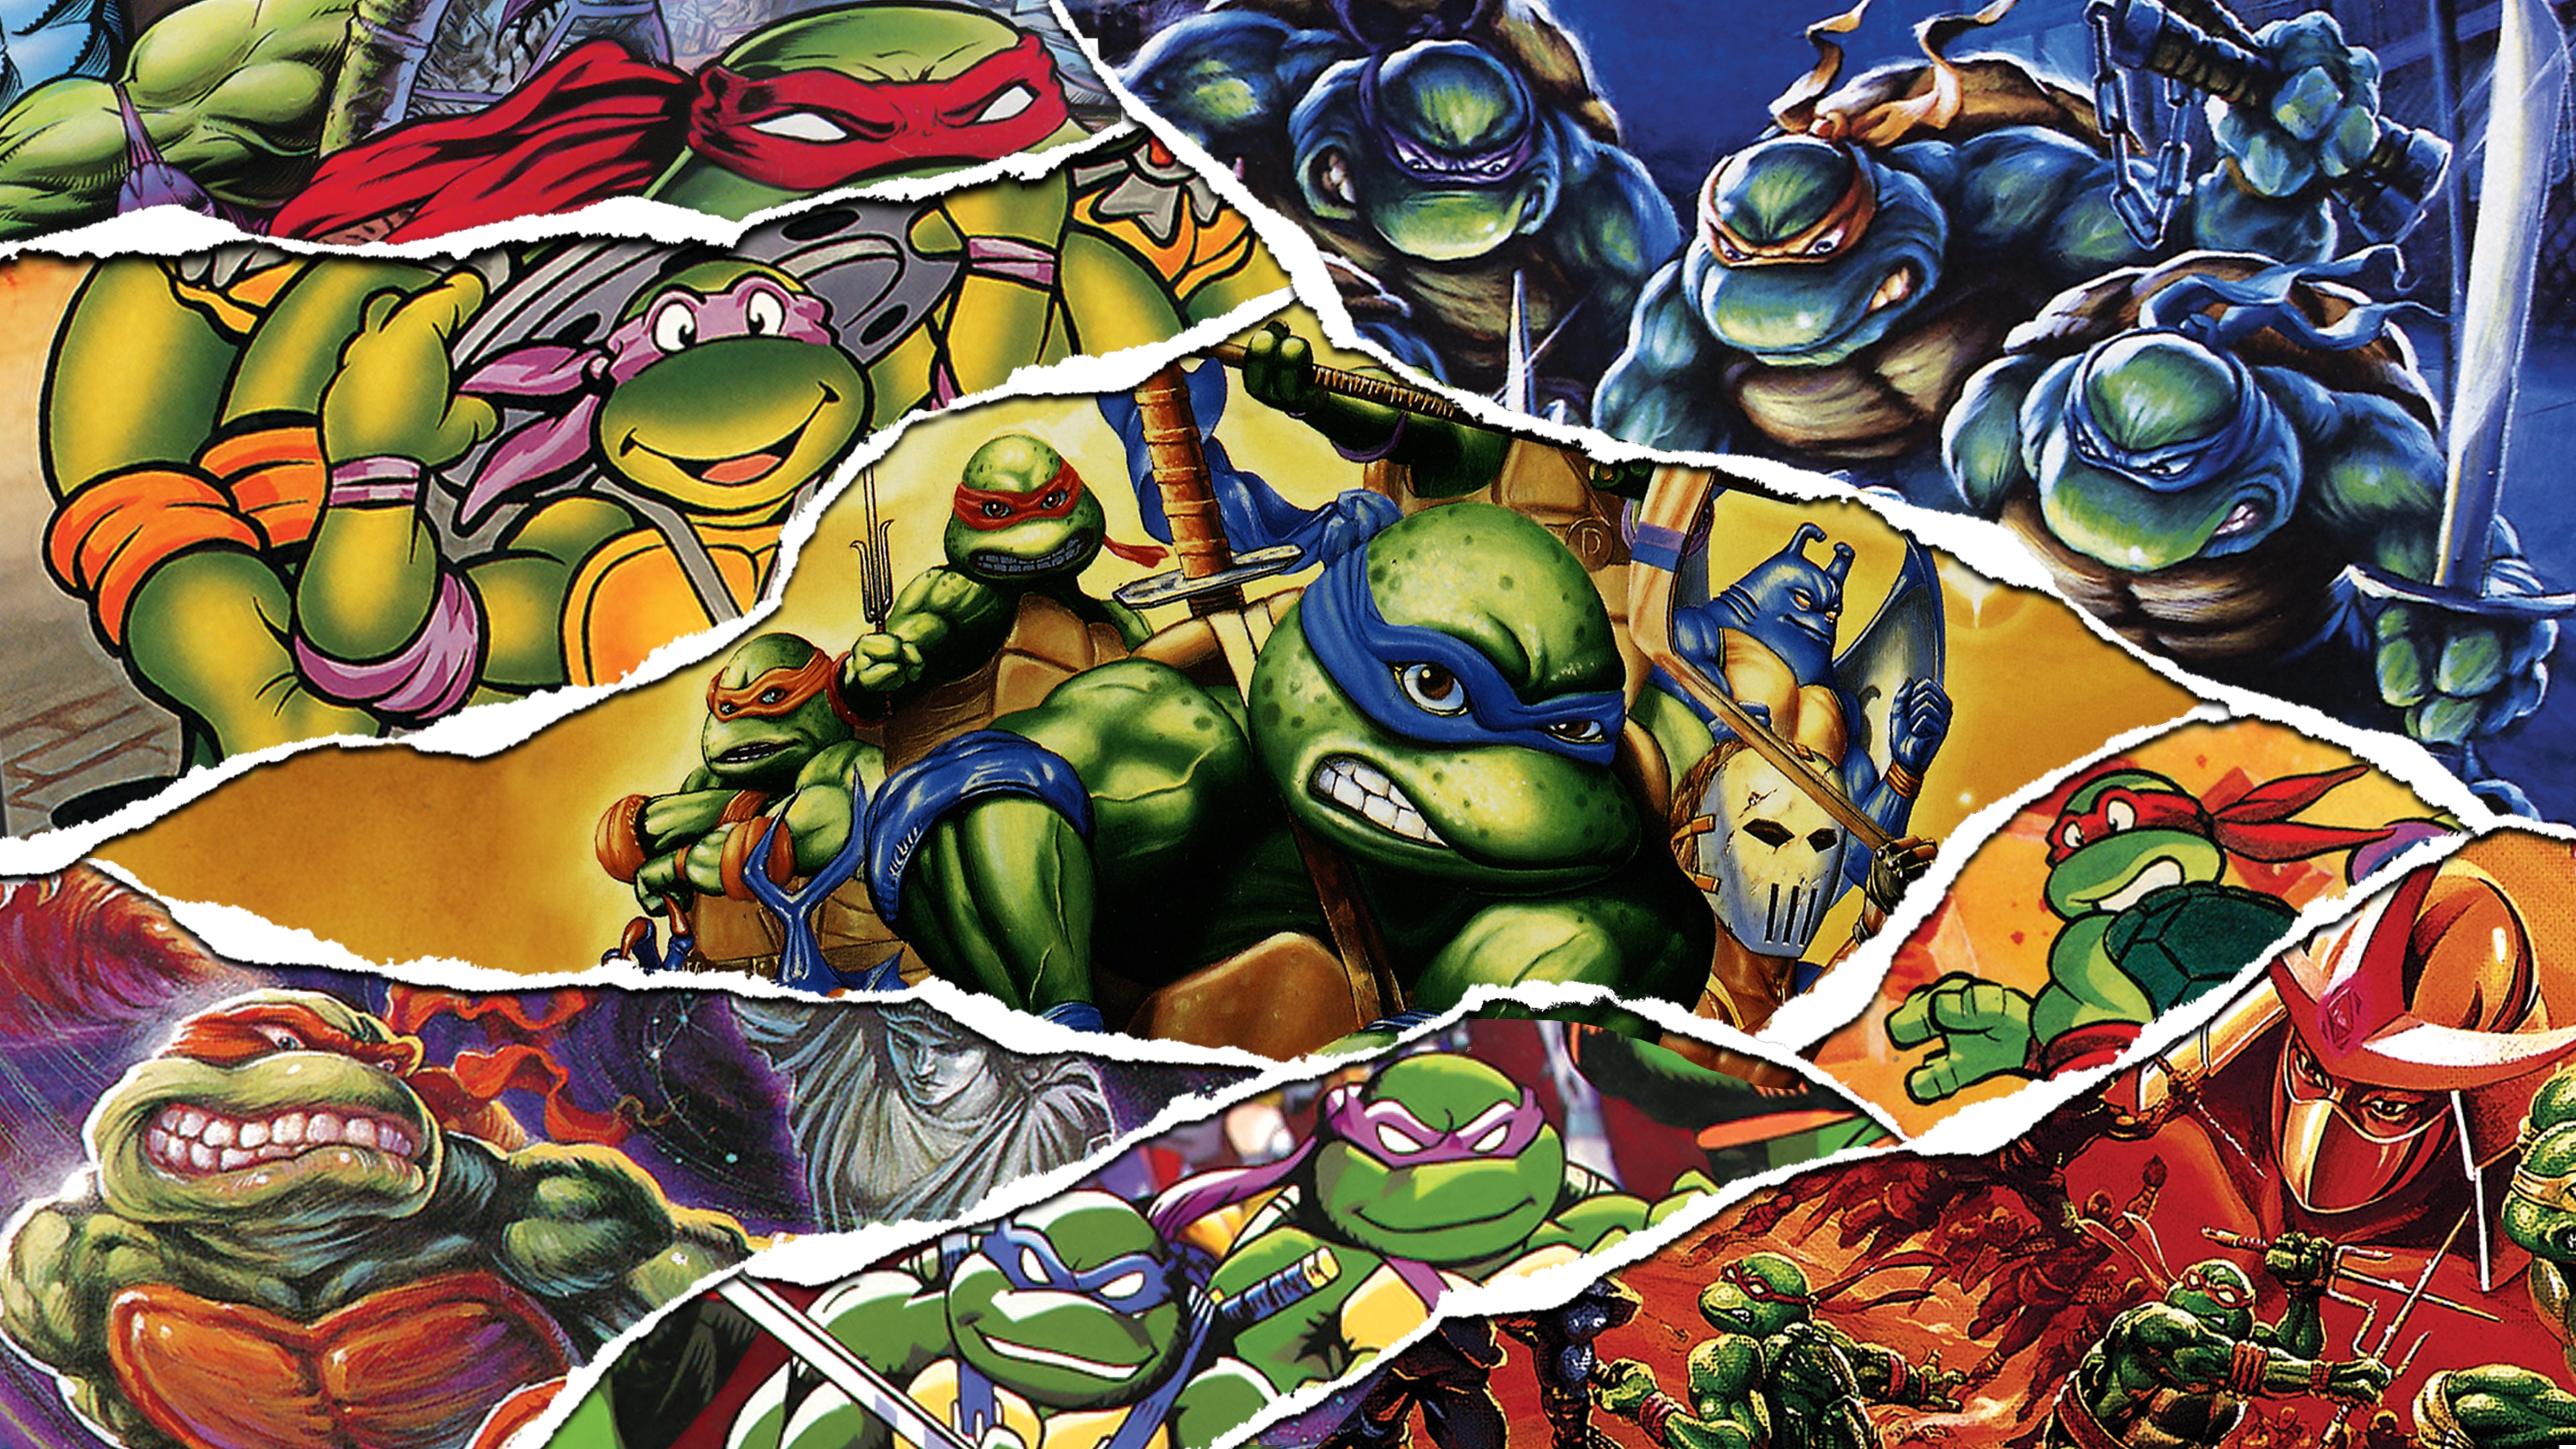 Teenage Mutant Ninja Turtles: The Cowabunga Collection PS4 & PS5 (English/Japanese Ver.)